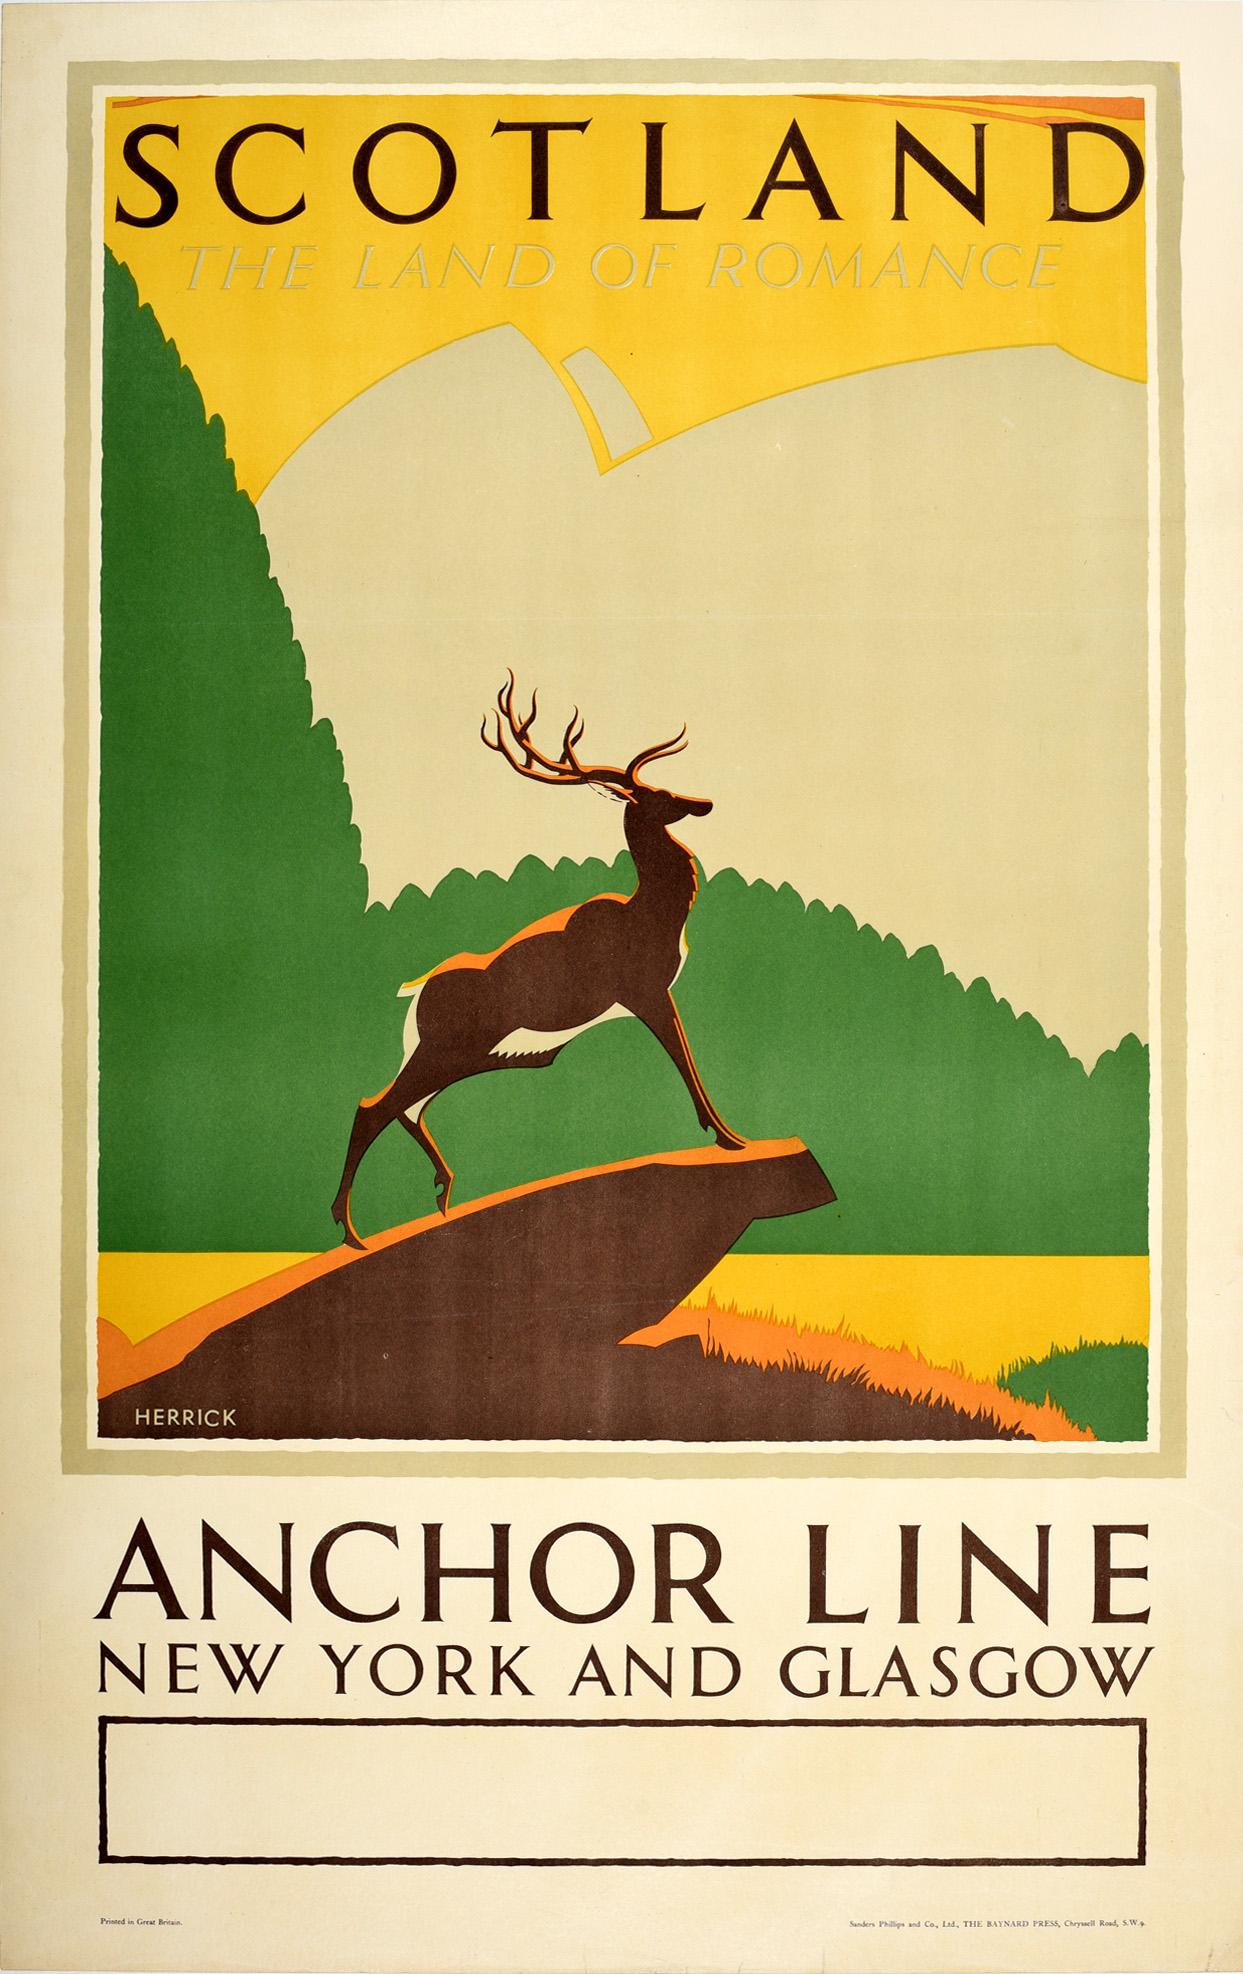 Frederick Charles Herrick Print - Original Vintage Travel Poster Scotland Anchor Line New York Glasgow Stag Design